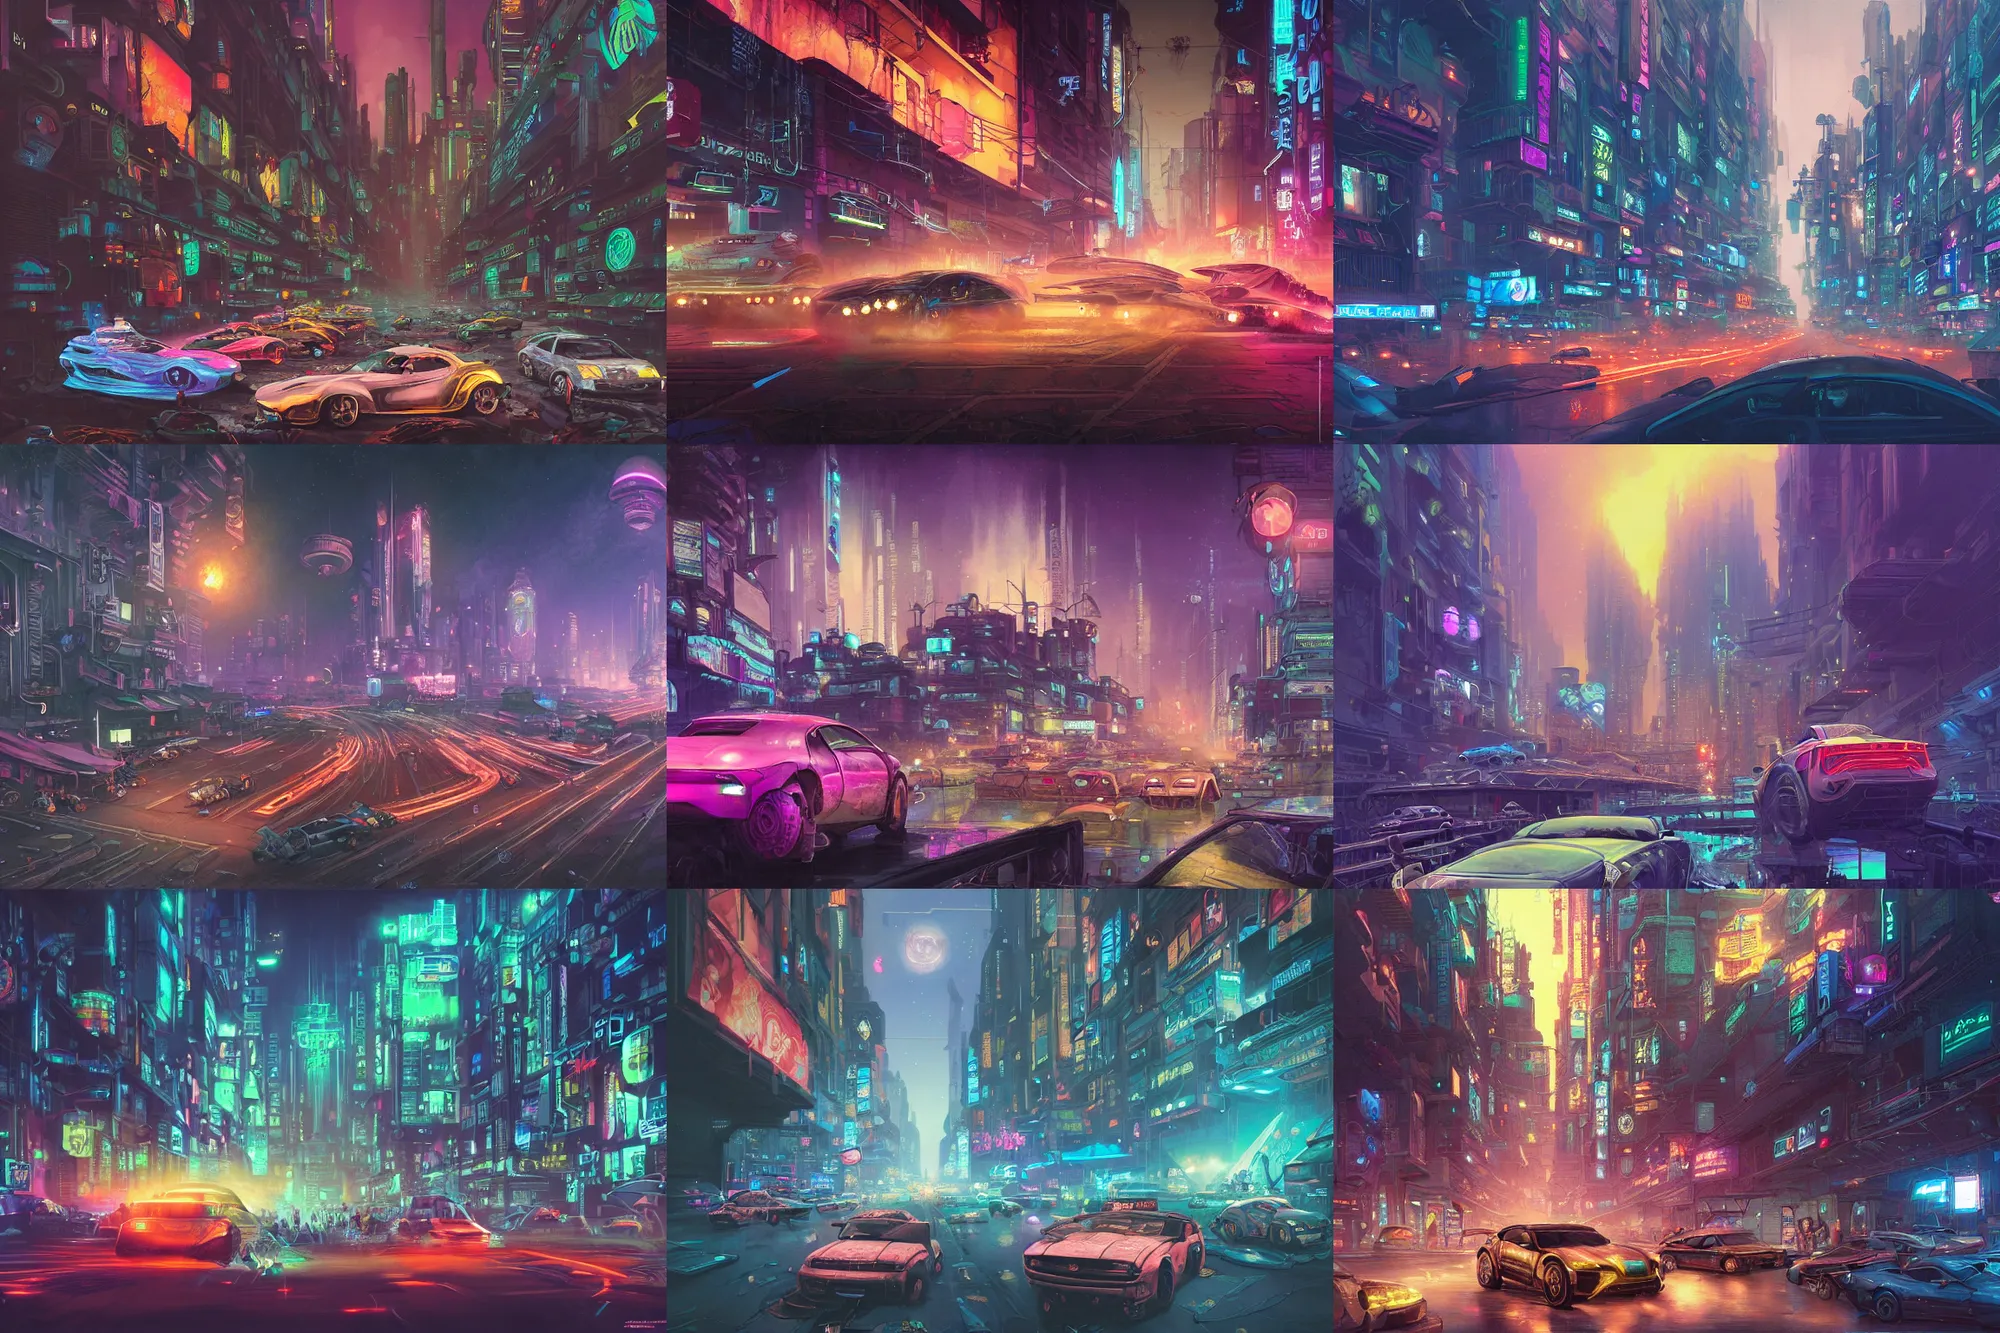 Cyberpunk City Future Digital Art 4k hd-wallpapers, digital art